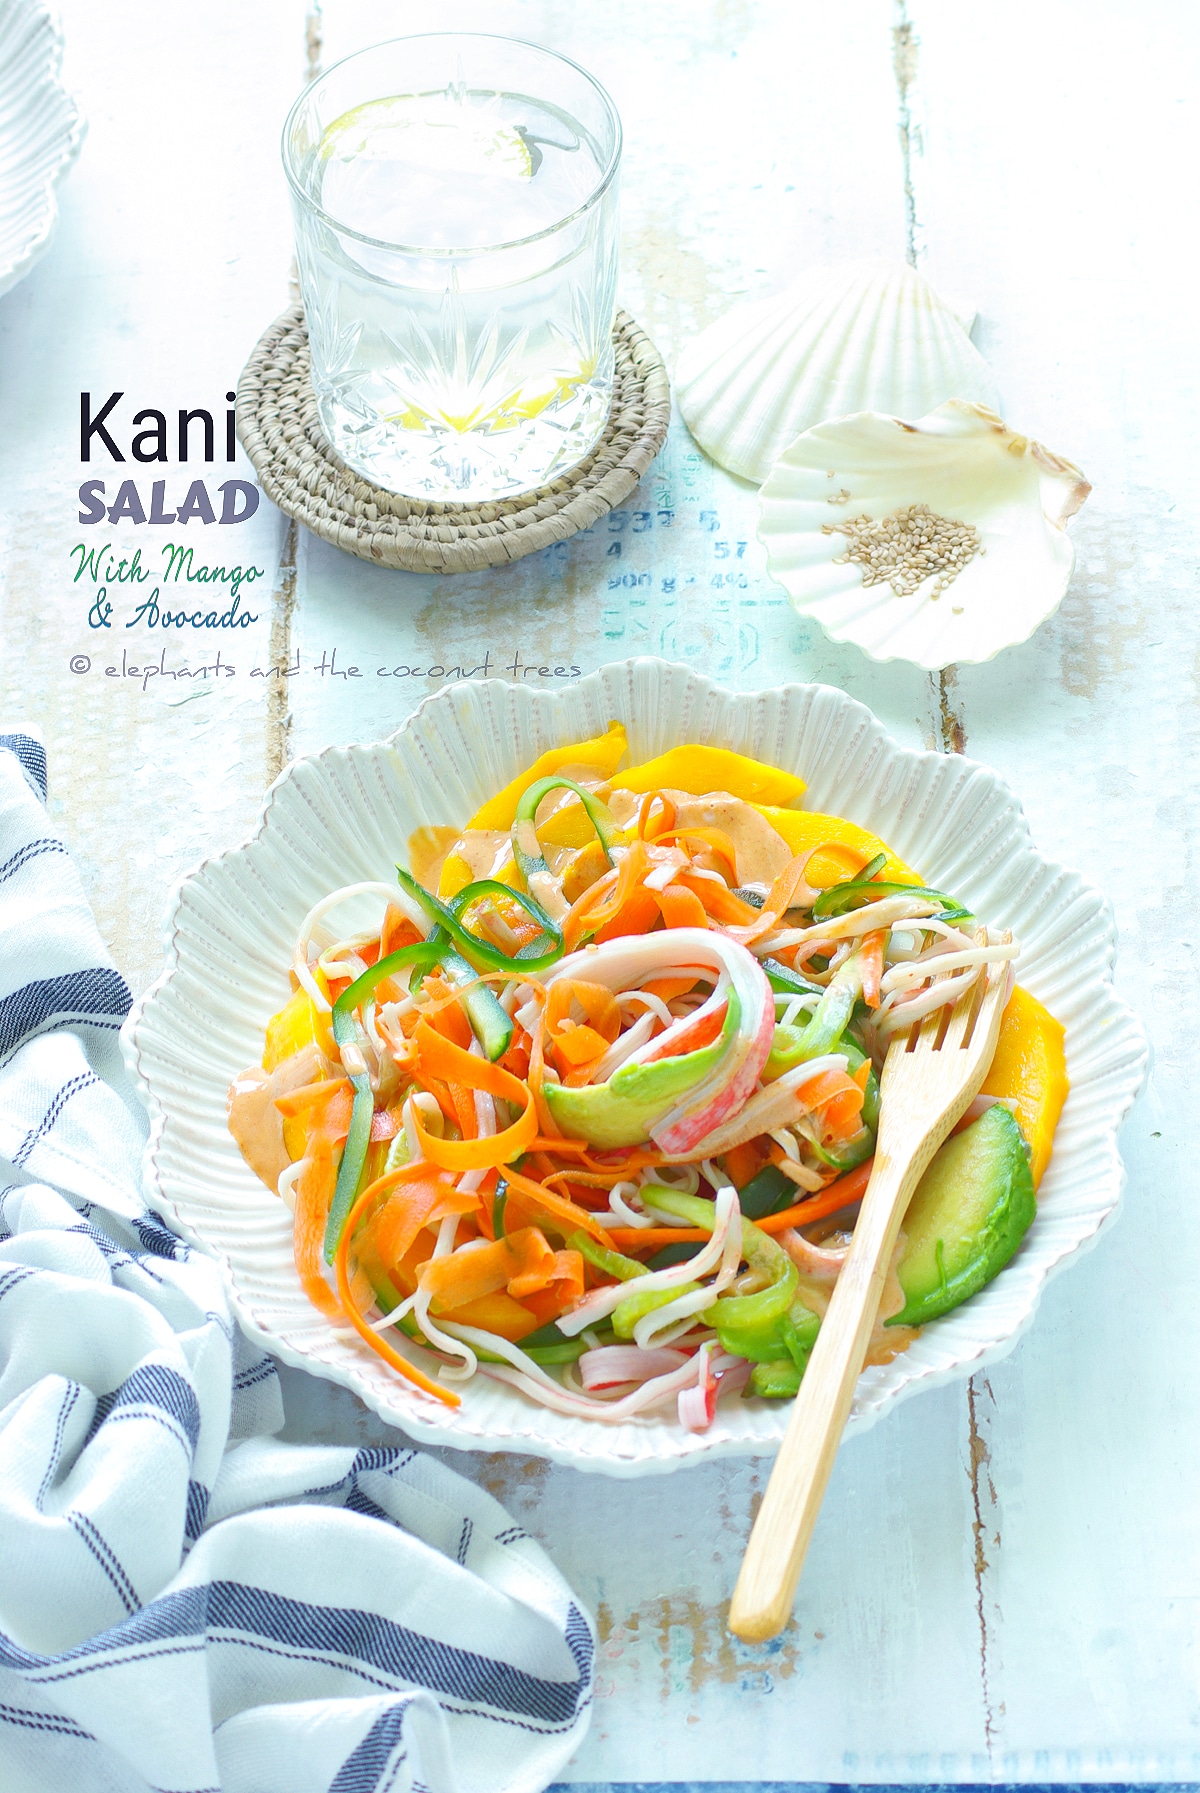 Spicy Kani salad with mango and avocado